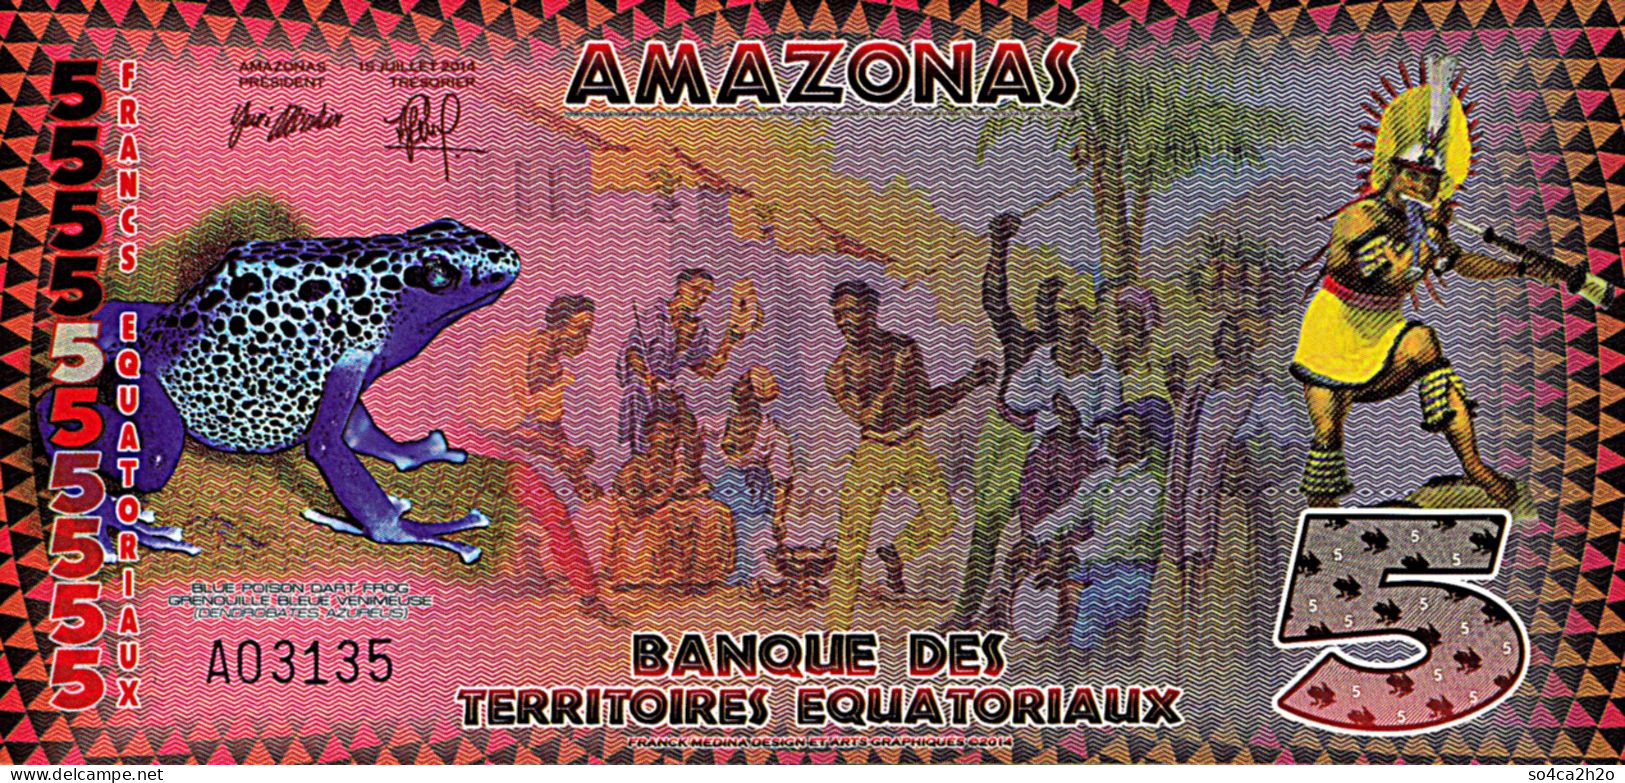 Amazonas  Equatorial Territories 5 Francs 2014 UNC POLYMER - Specimen